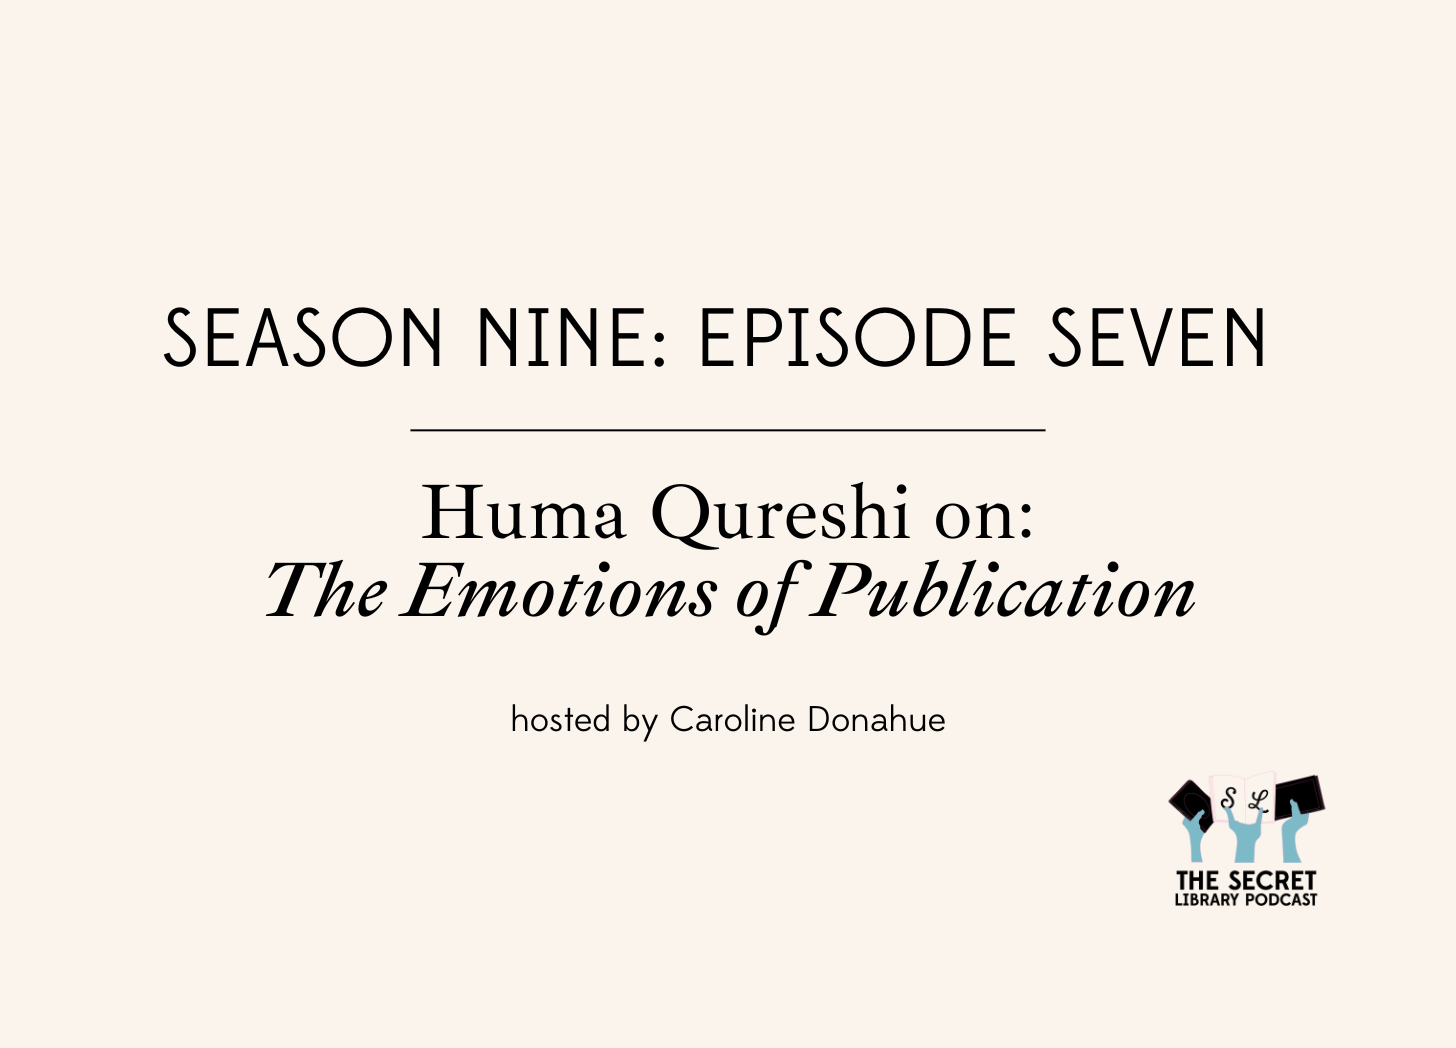 The Emotions of Publication | Huma Qureshi